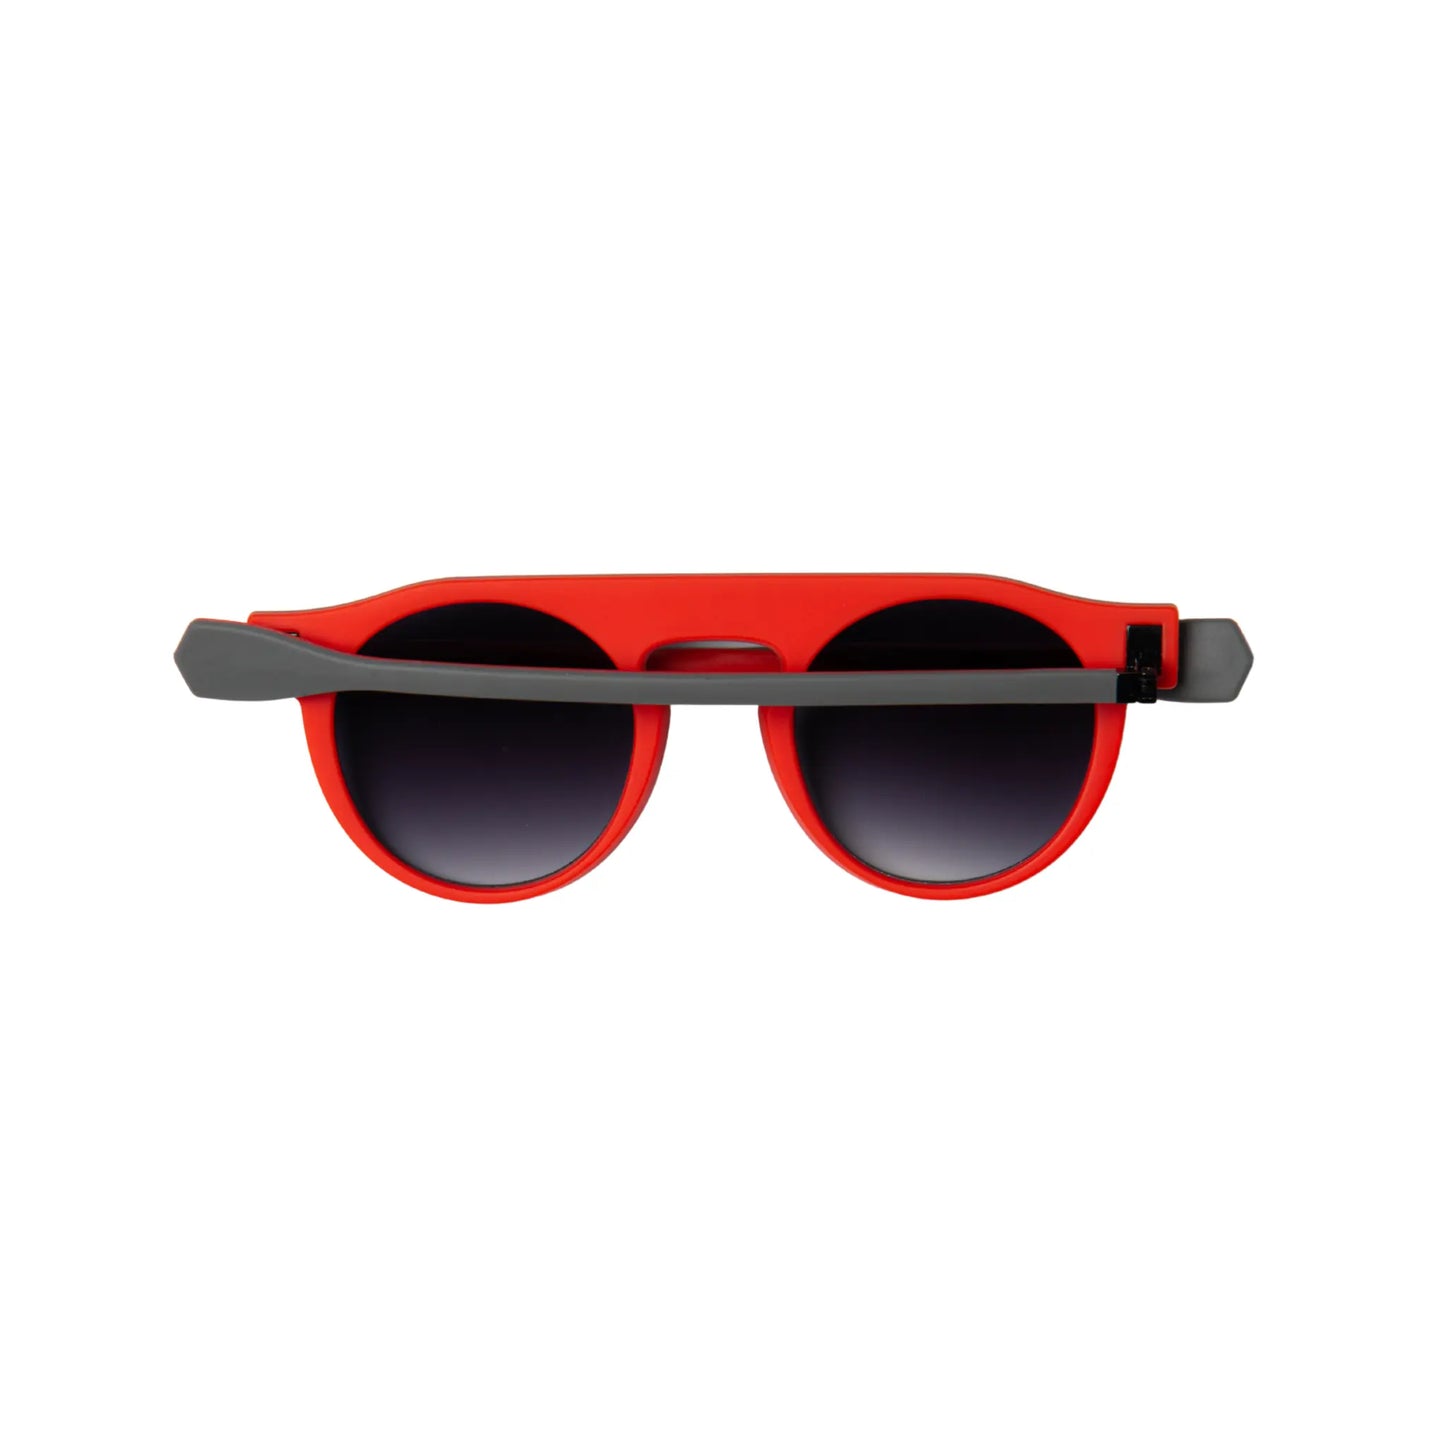 Reverso sunglasses grey & red reversible & ultra light back view